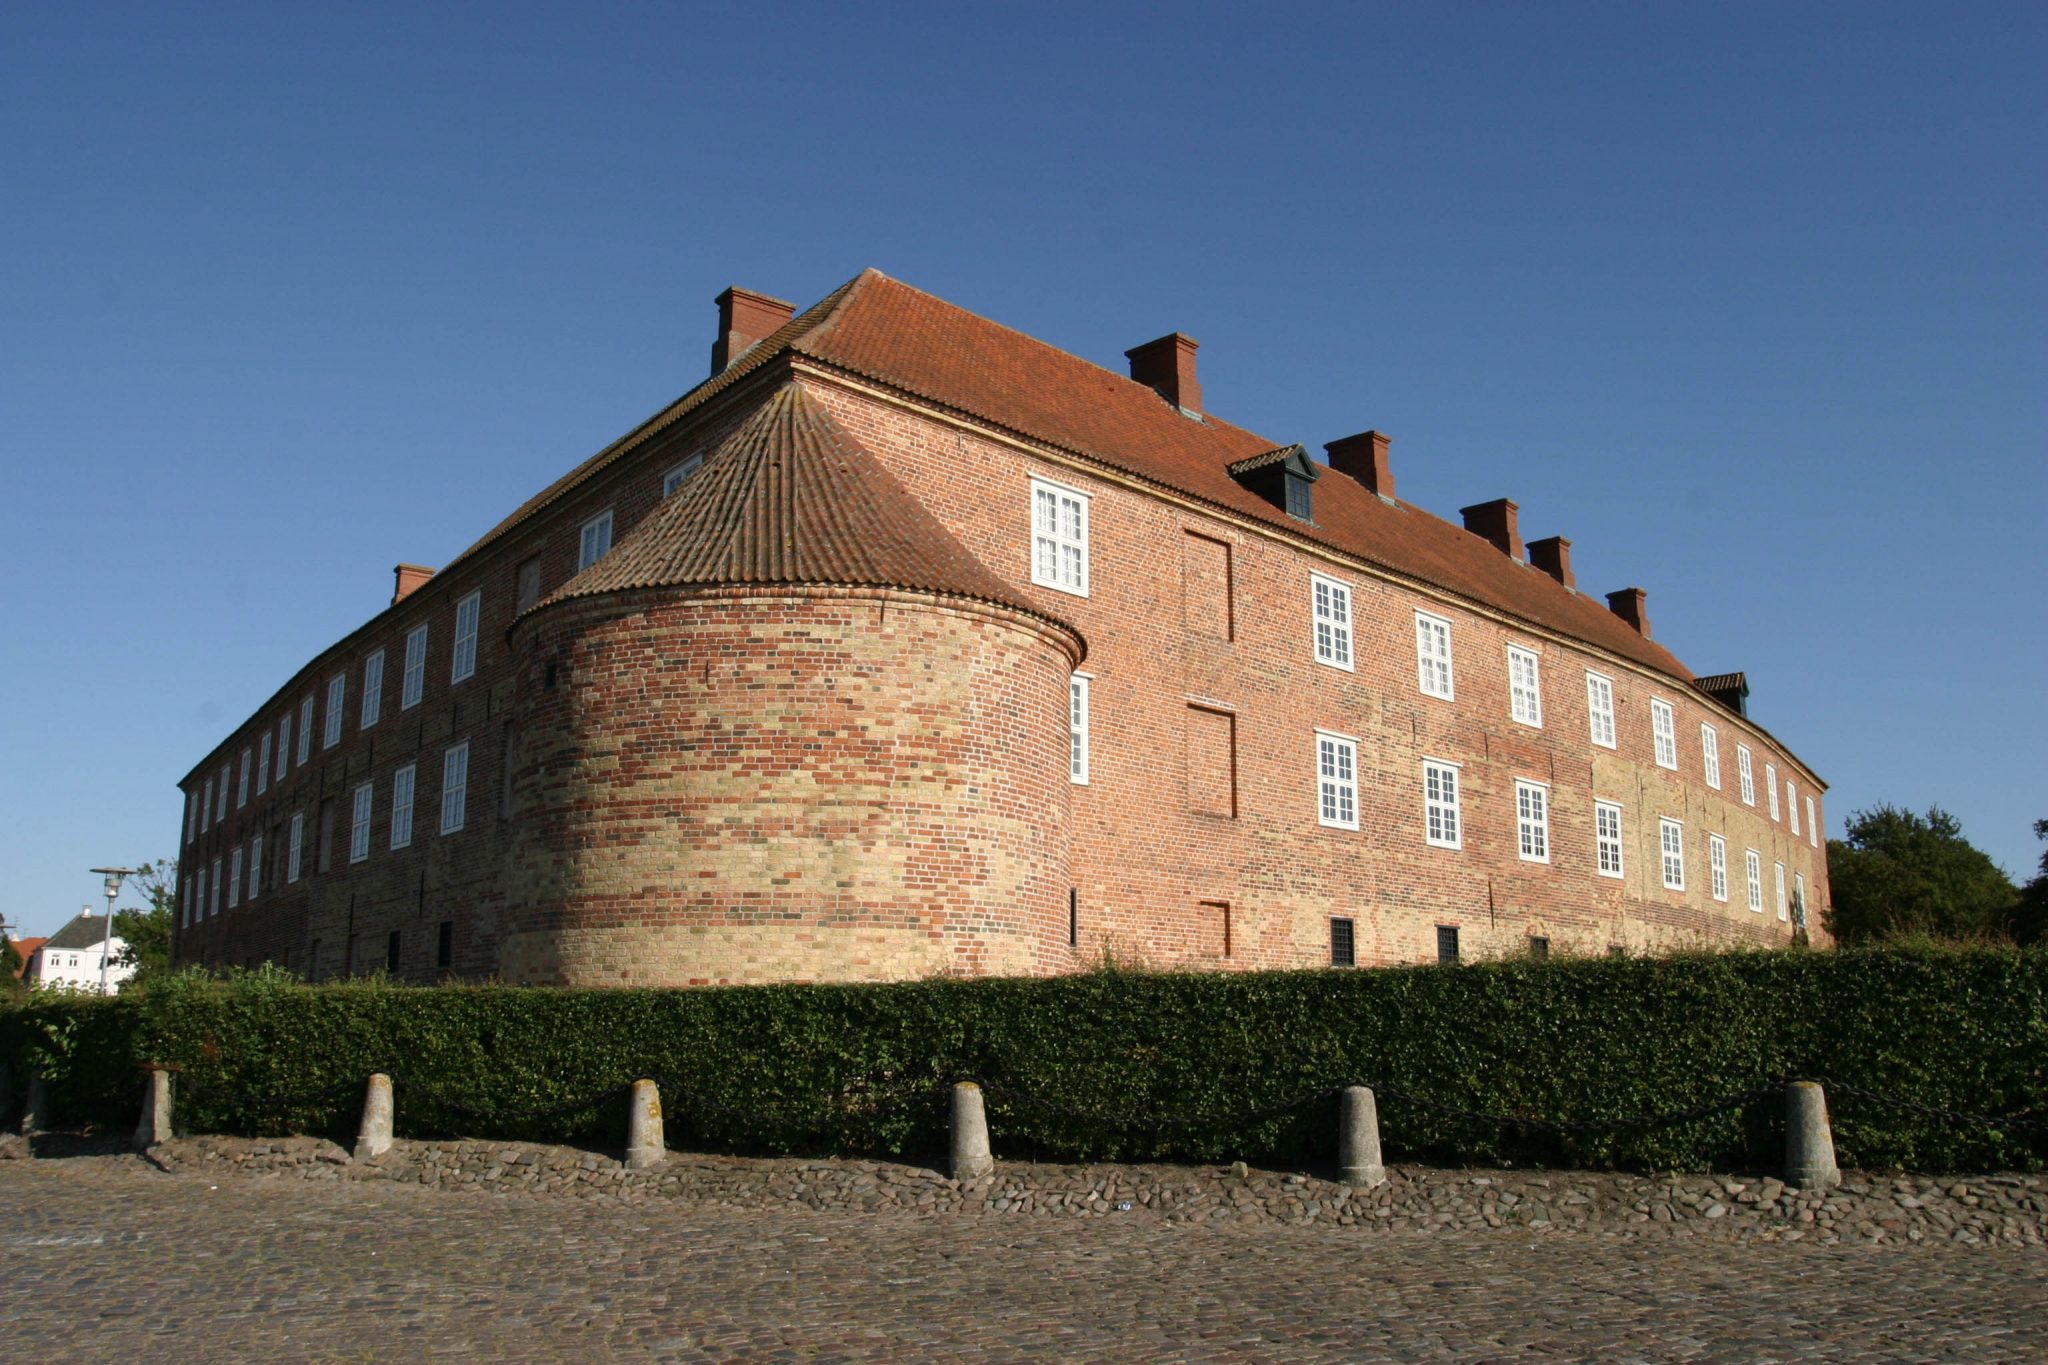 Sonderborg Castle